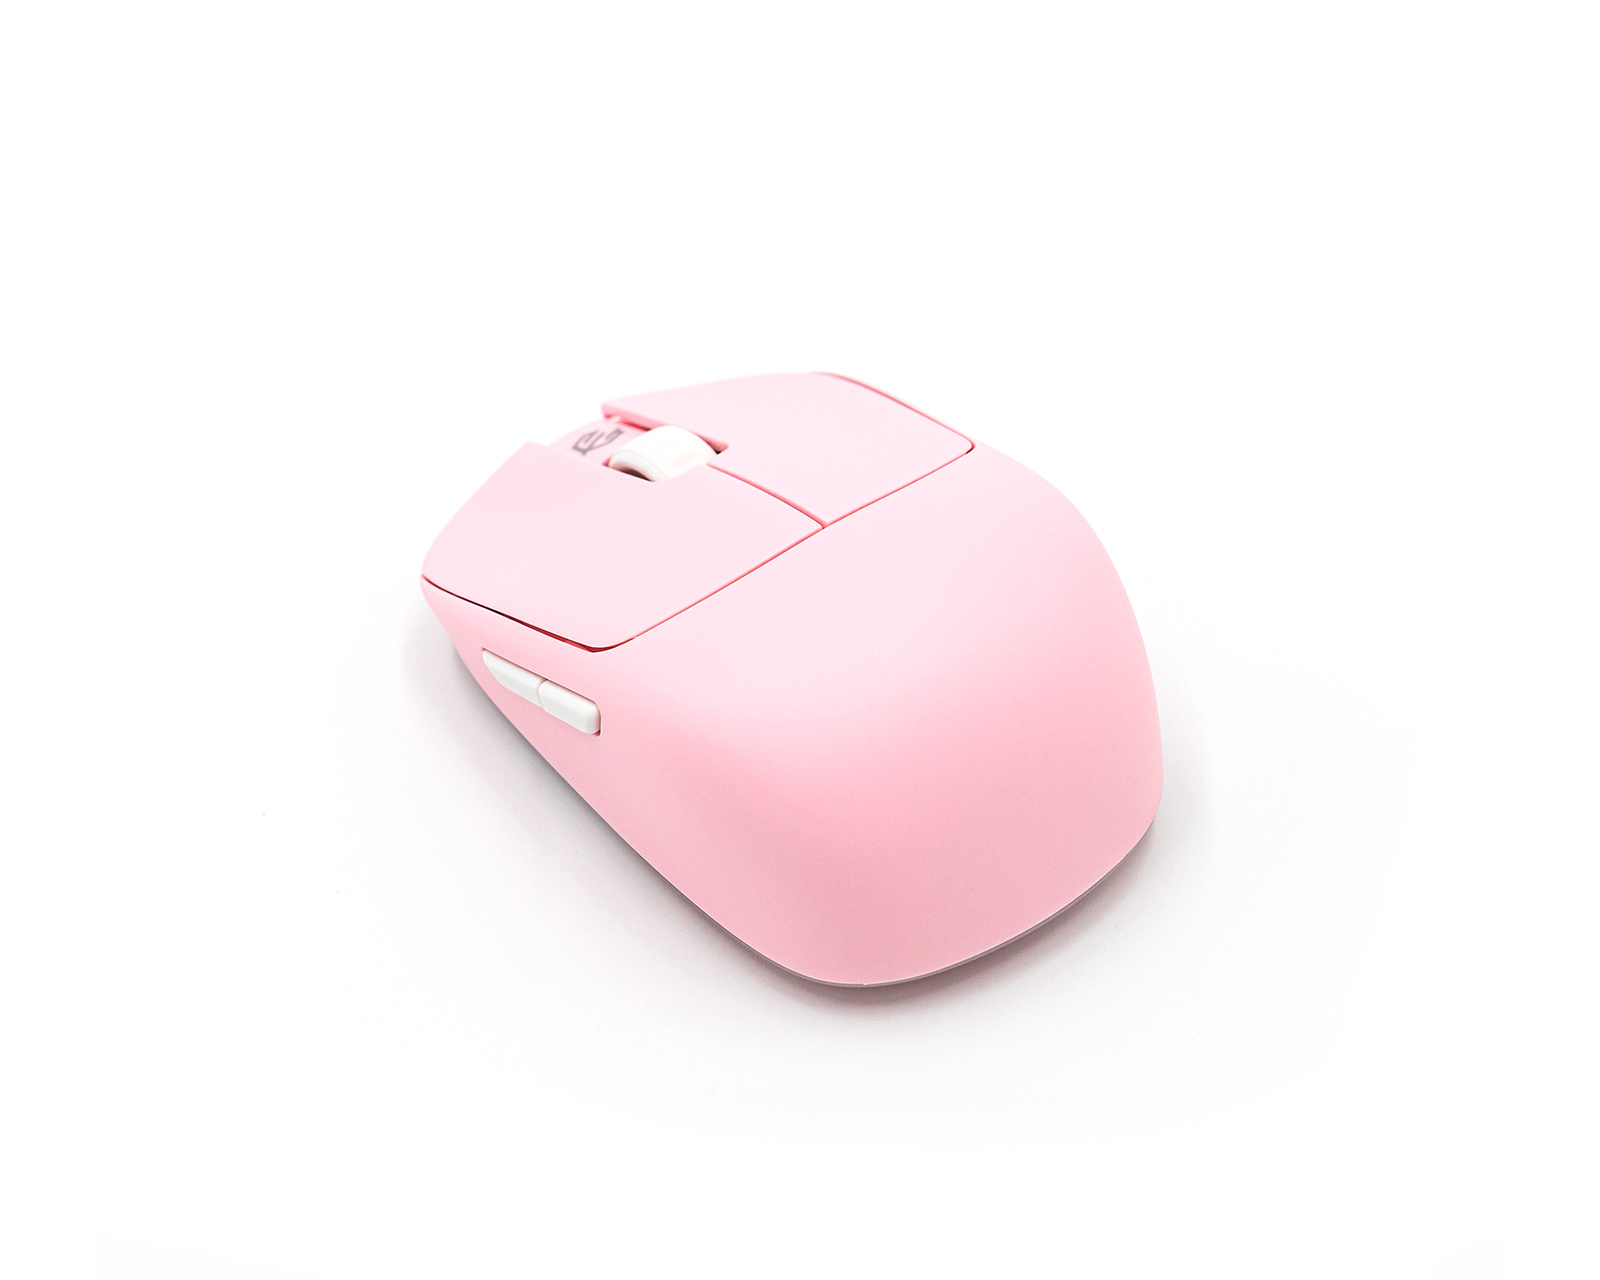 販売実績No.1 G-WOLVES HSK Plus Wireless Pink 新品未開封 asakusa.sub.jp